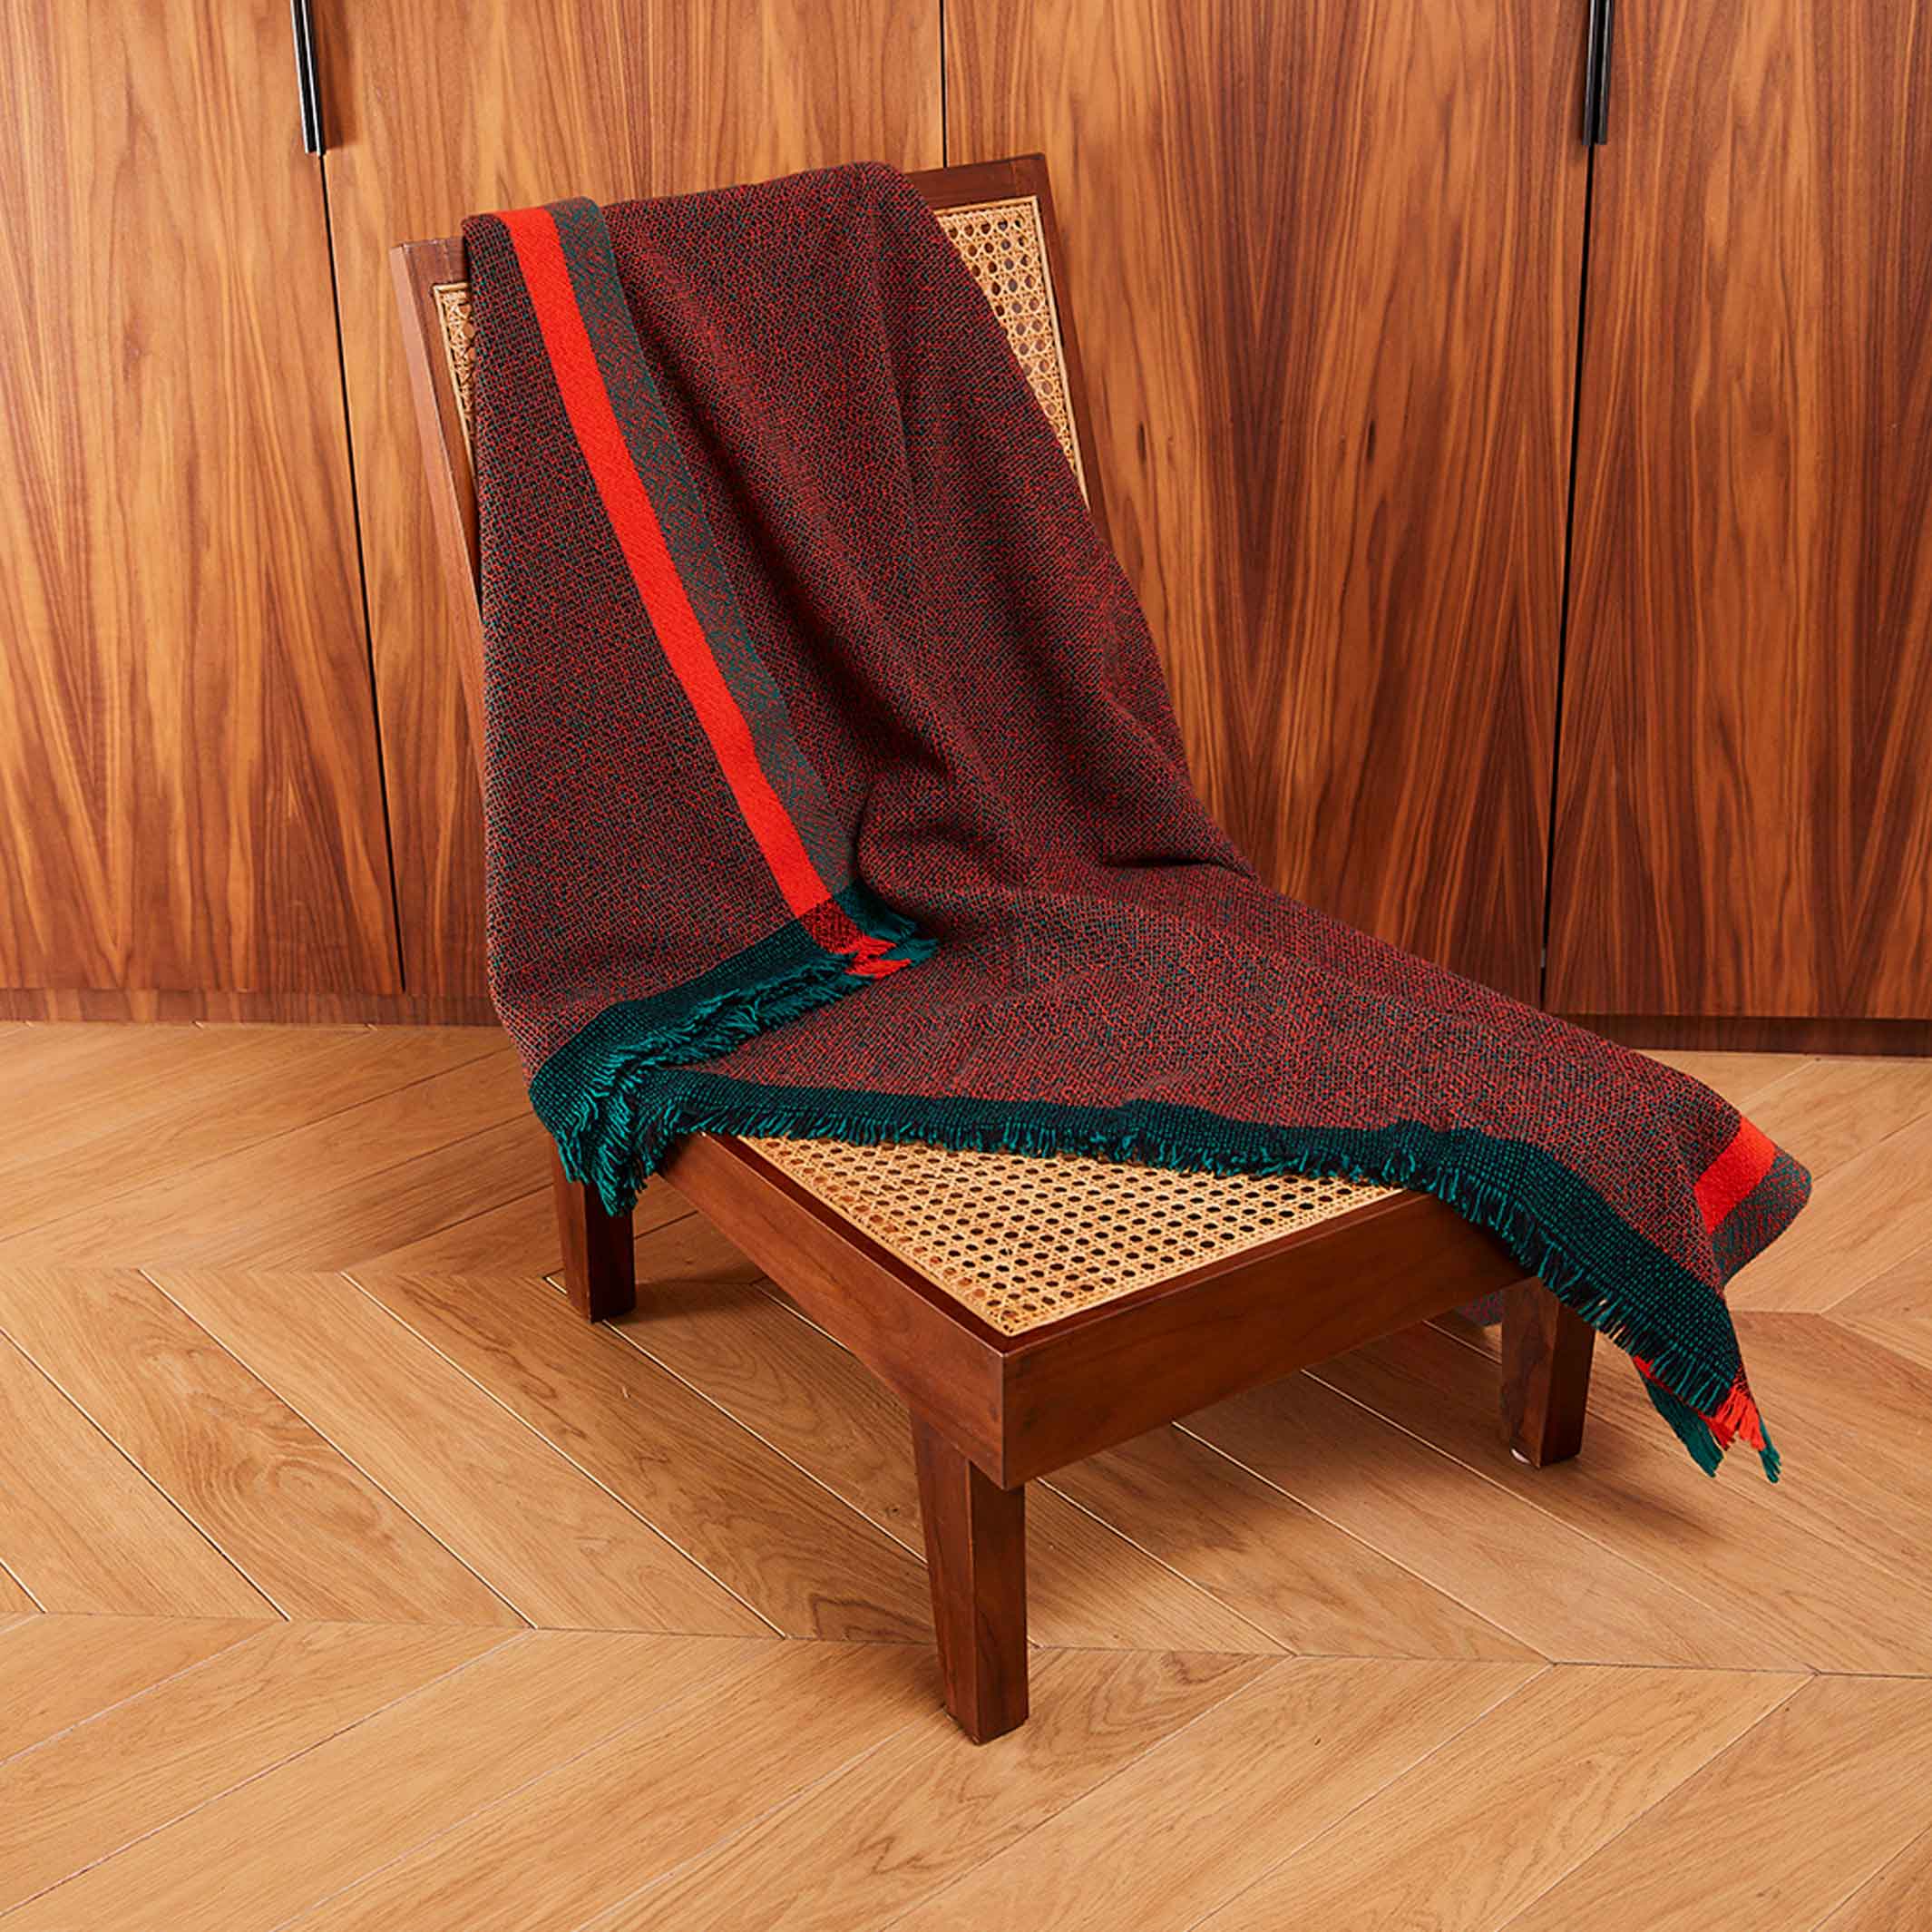 INTEGRATE THROW THINKING | red bedspread | 180x140cm | 100% Merino wool | Cristian Zuzunaga